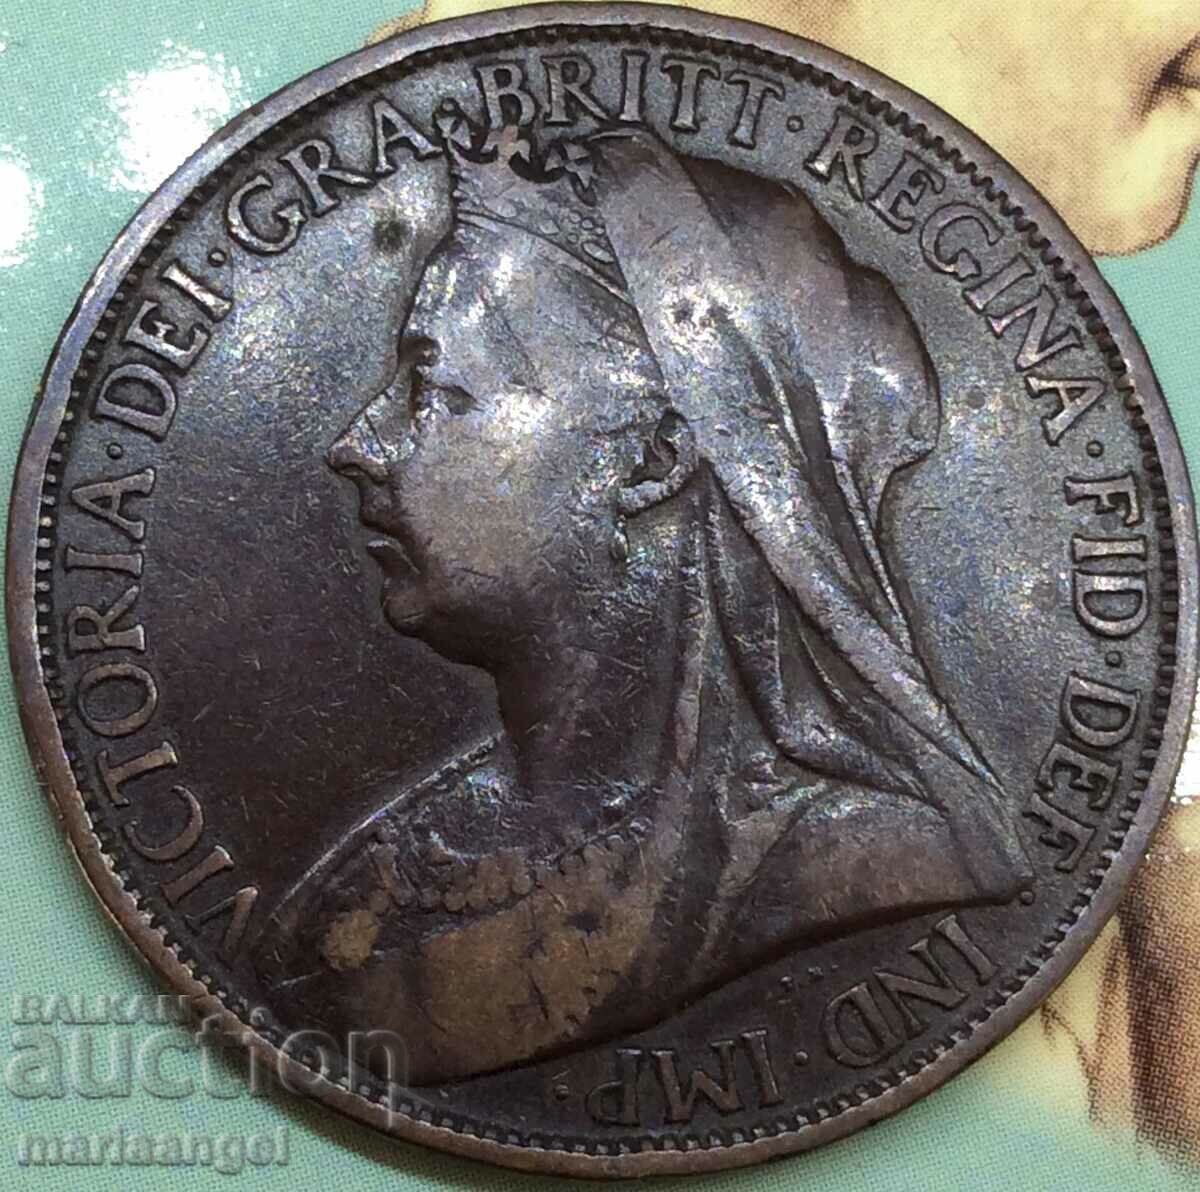 Marea Britanie 1 Penny 1900 30mm Bronz